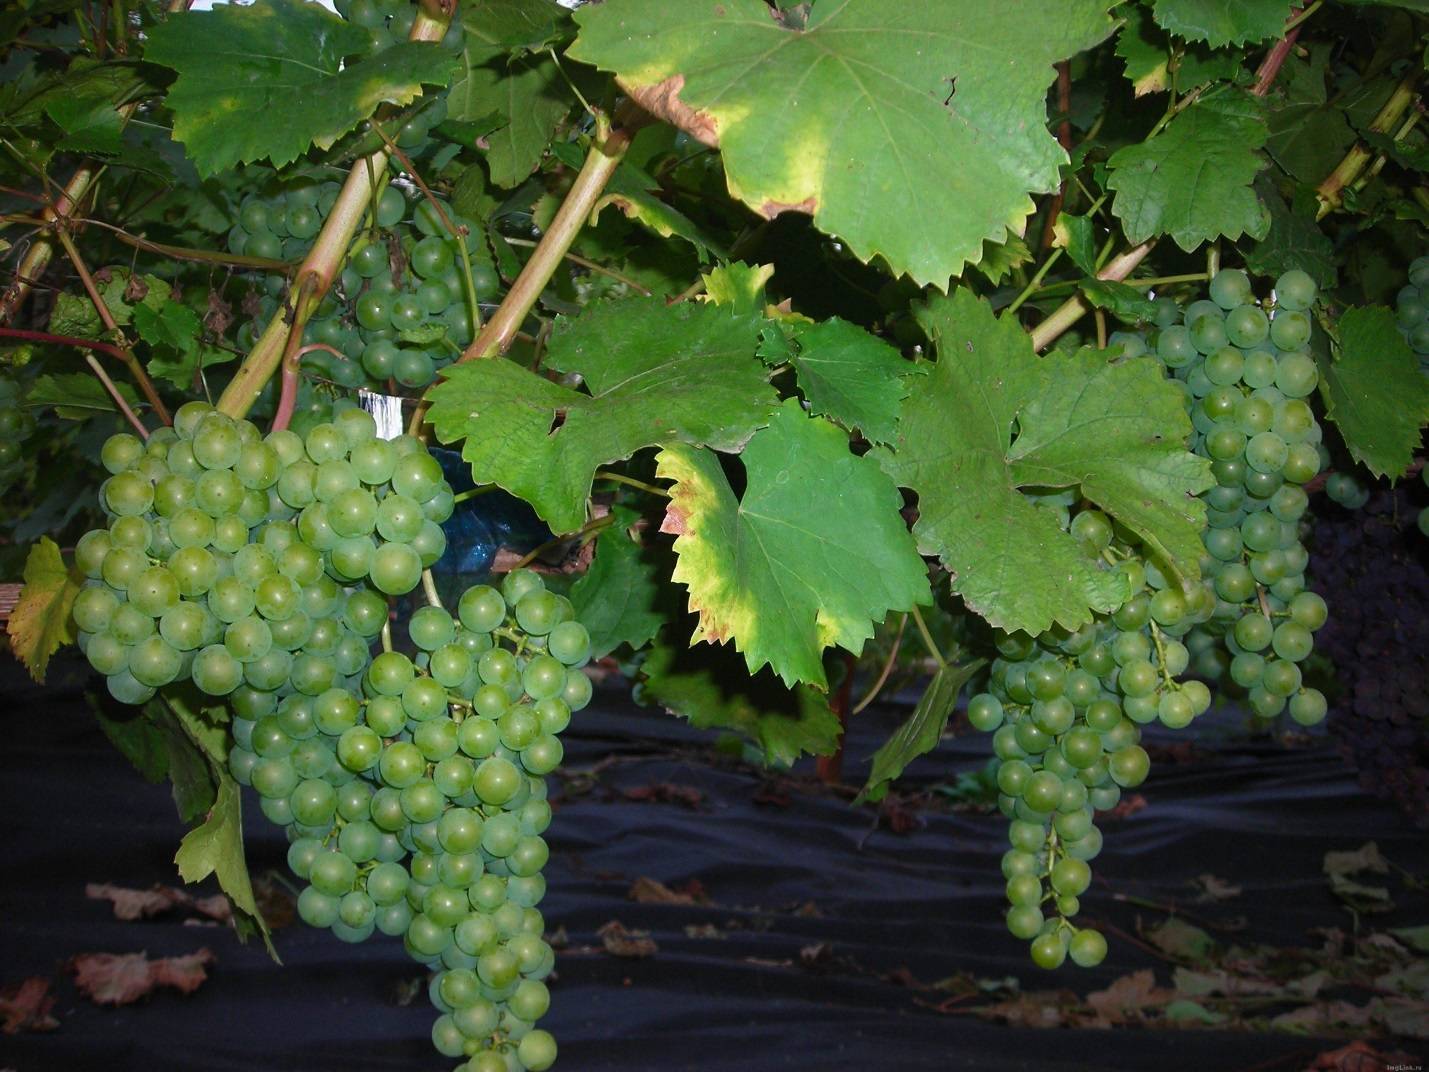 Ркацители: сорт винограда и его описание, характеристики и правила ухода